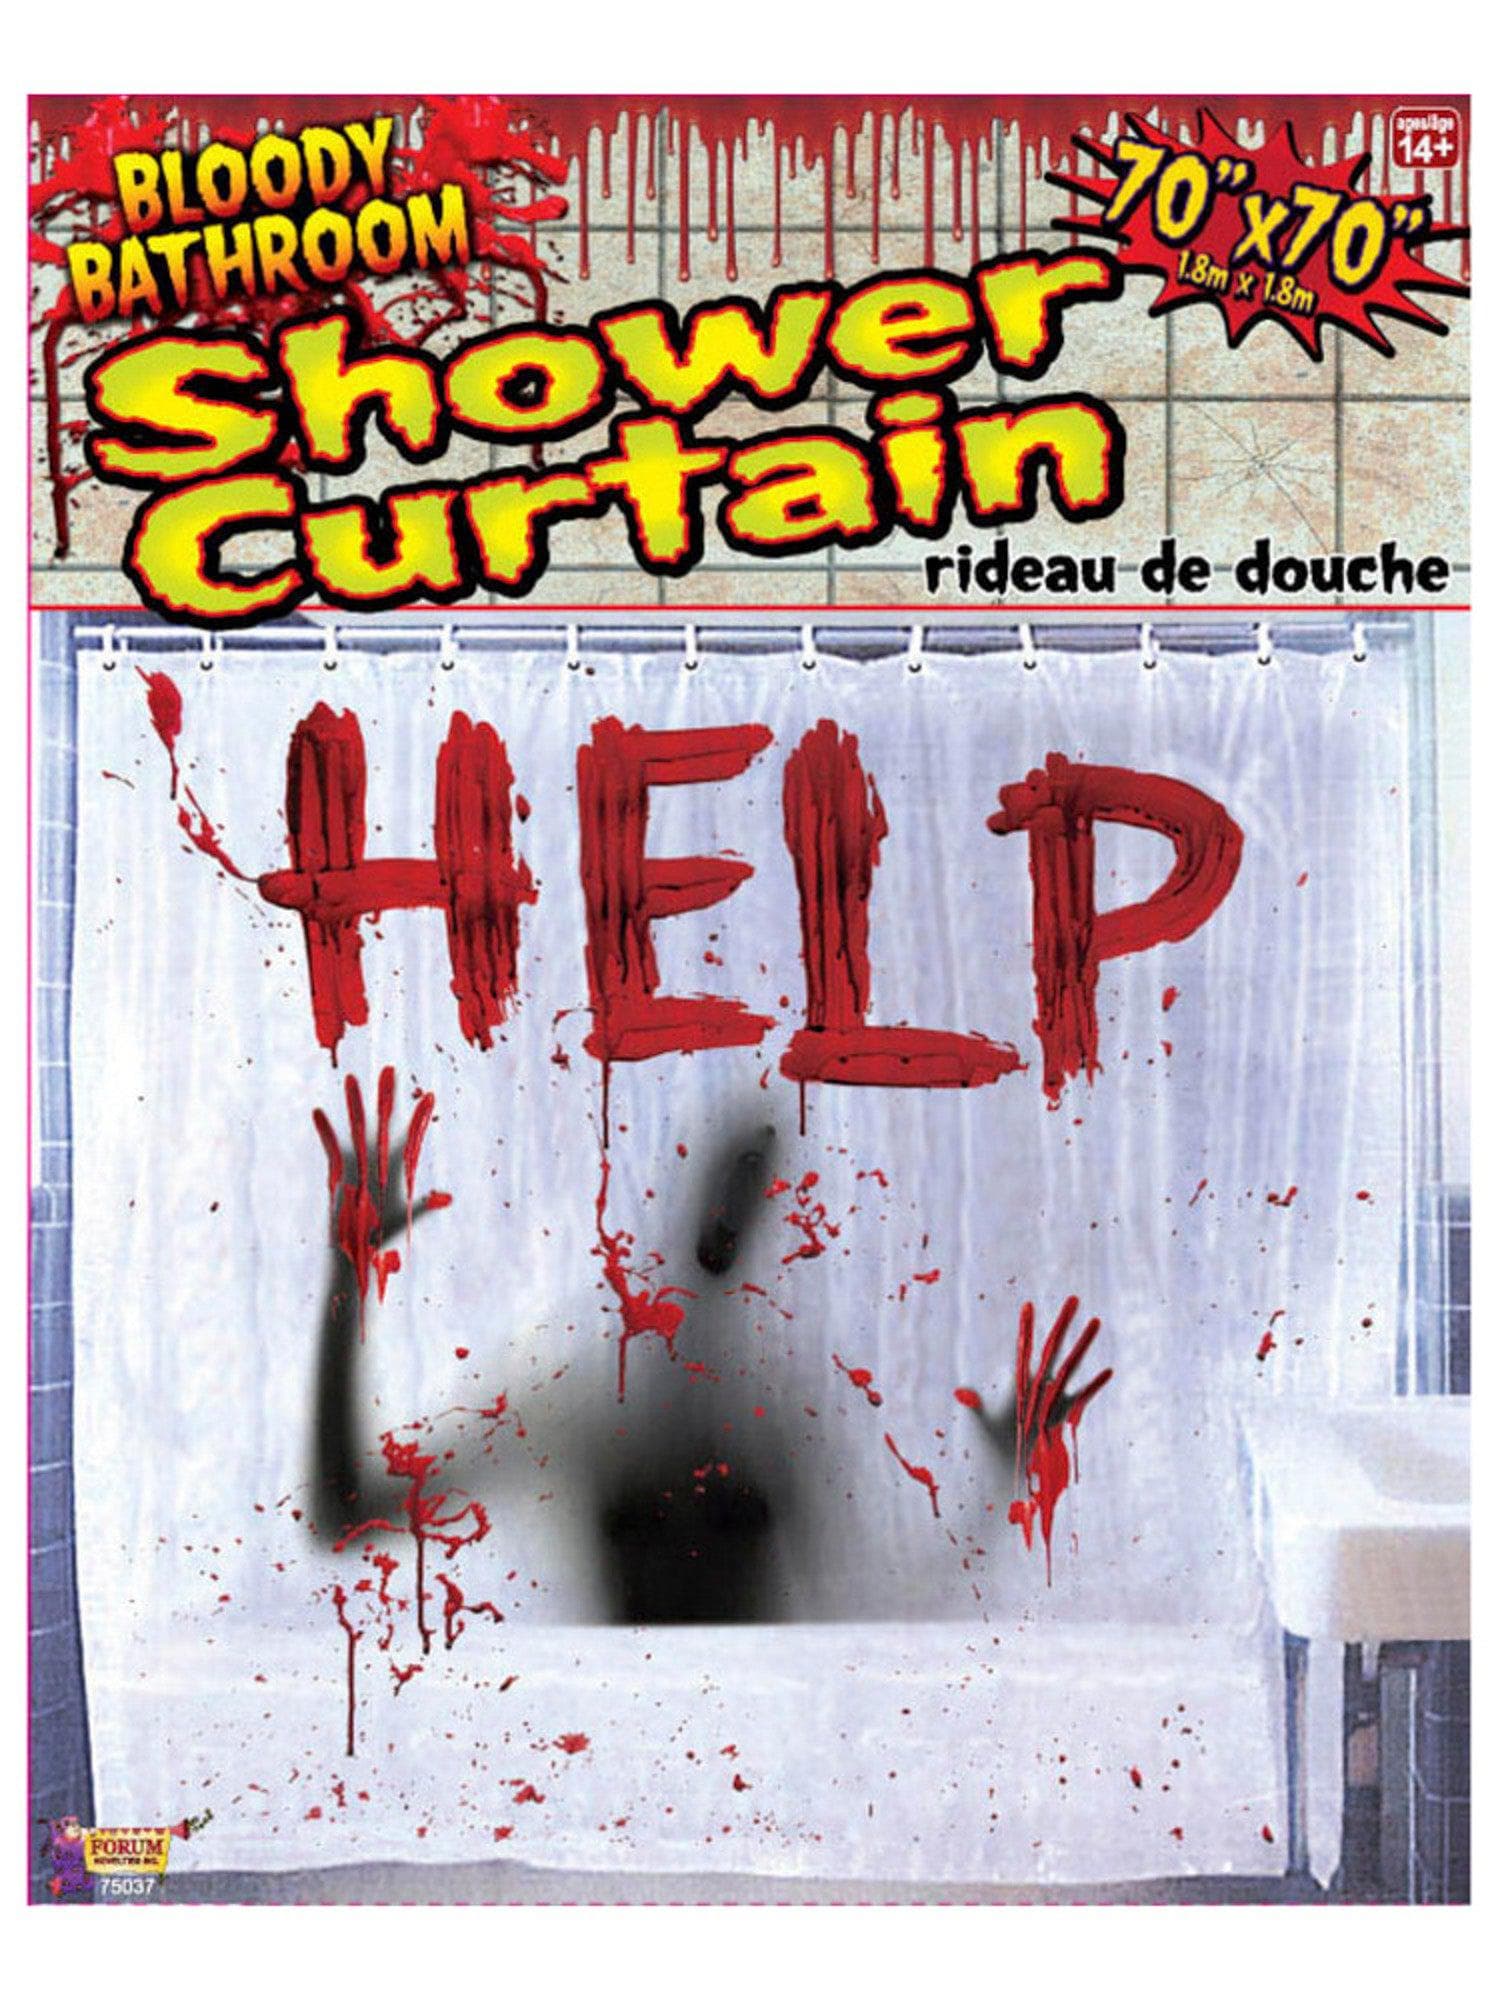 Bloody HELP Bathroom Shower Curtain - costumes.com